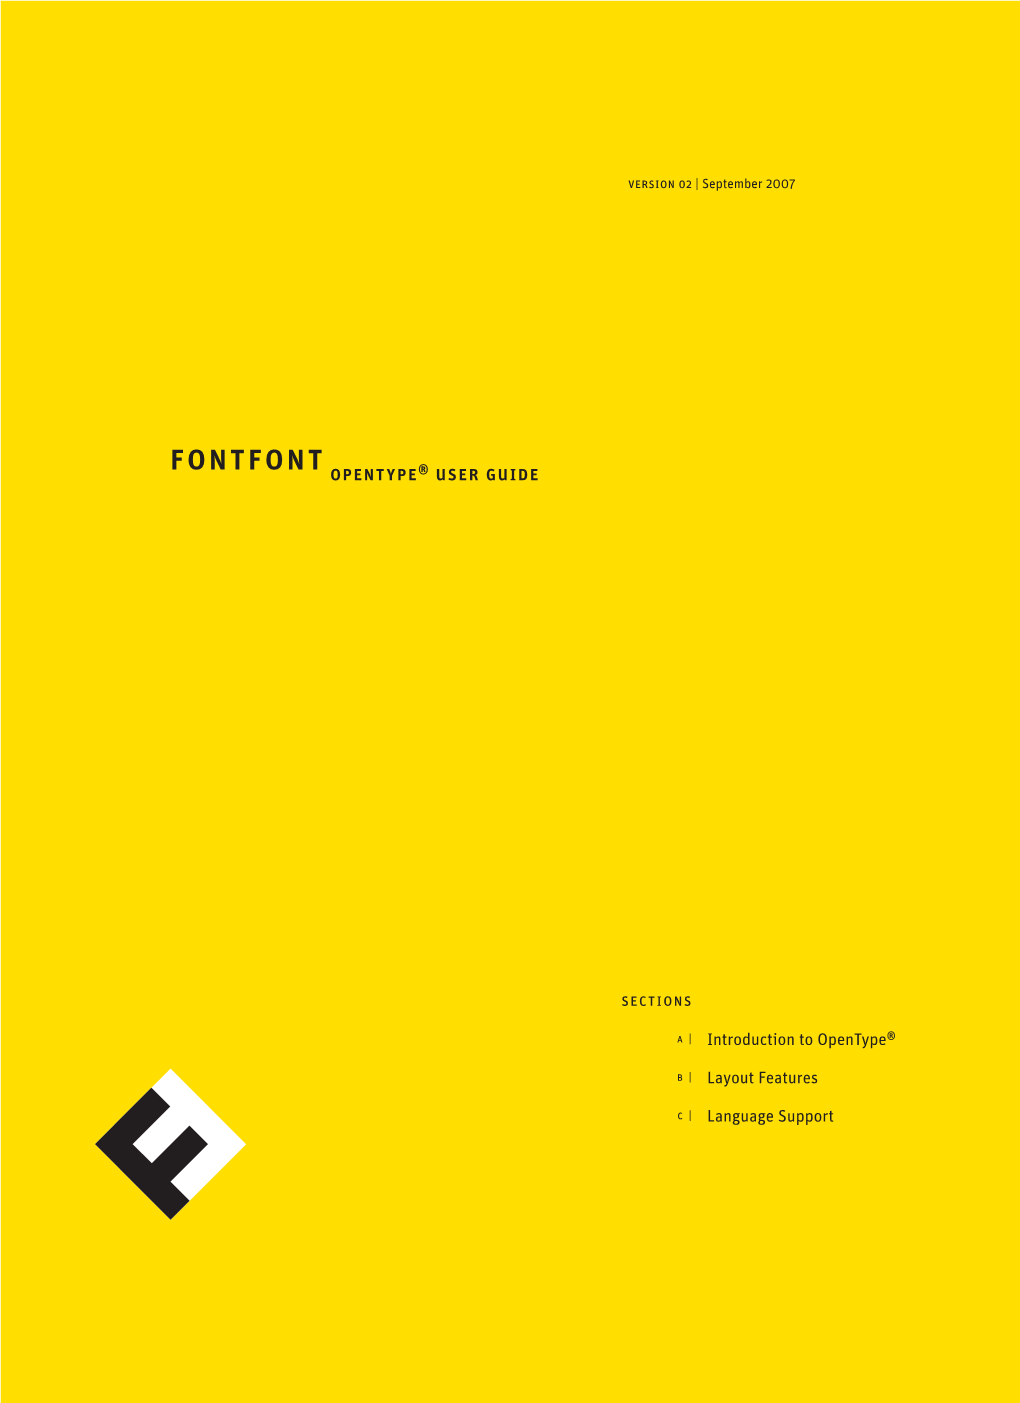 Fontfont Opentype® User Guide